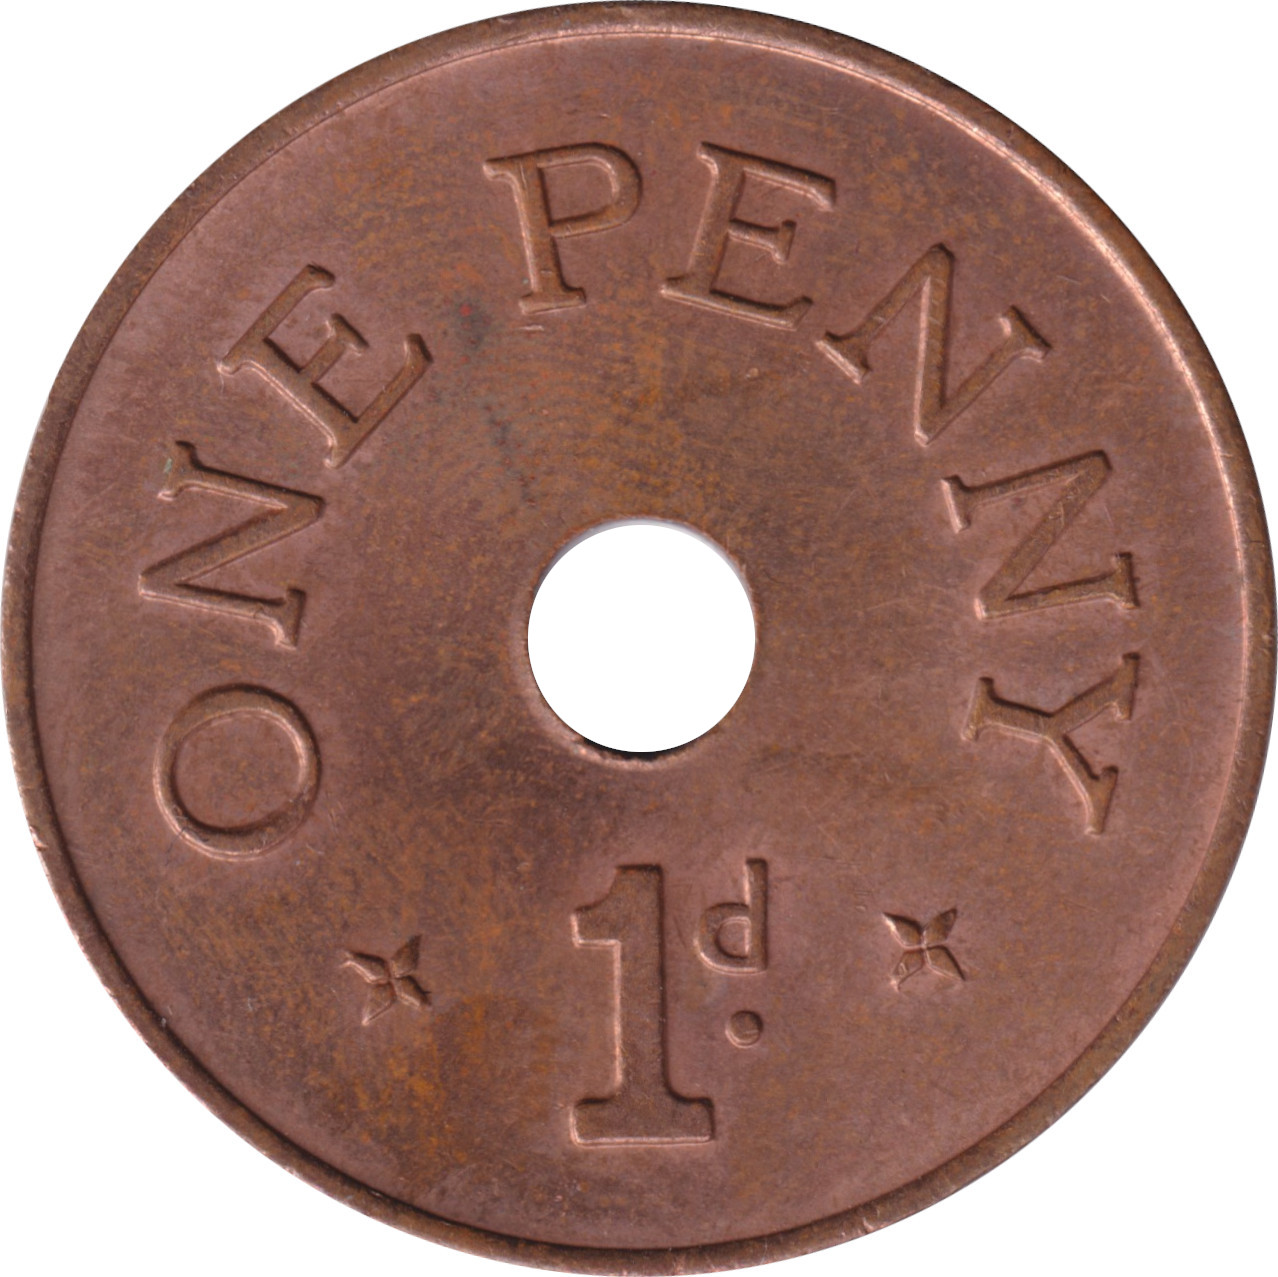 1 penny - Zambia